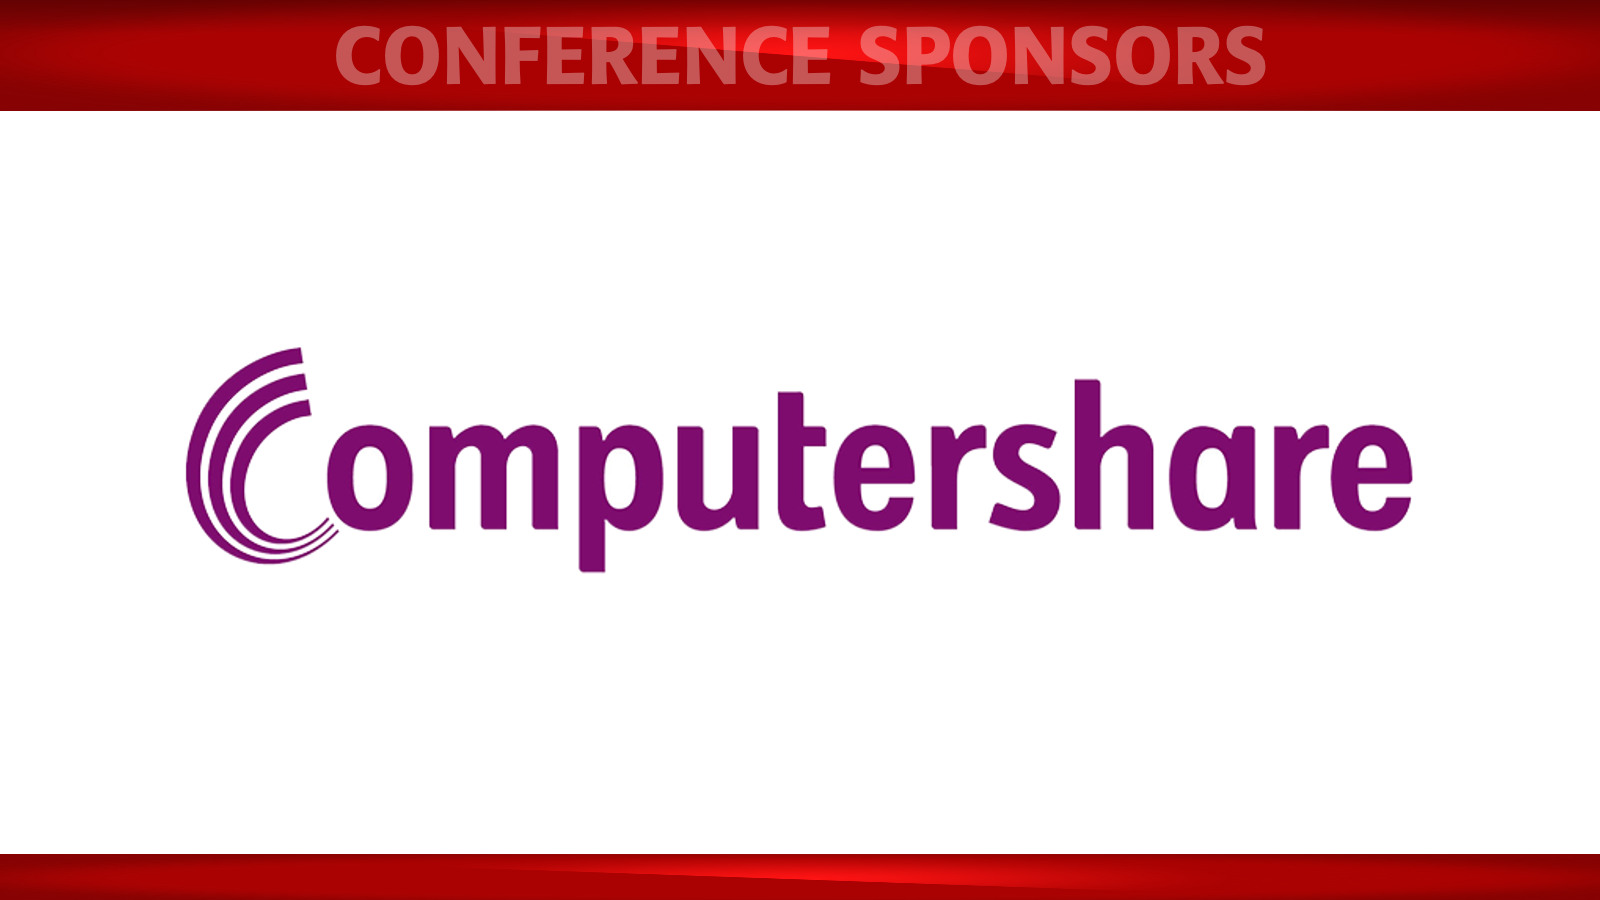 Image of Computershare logo